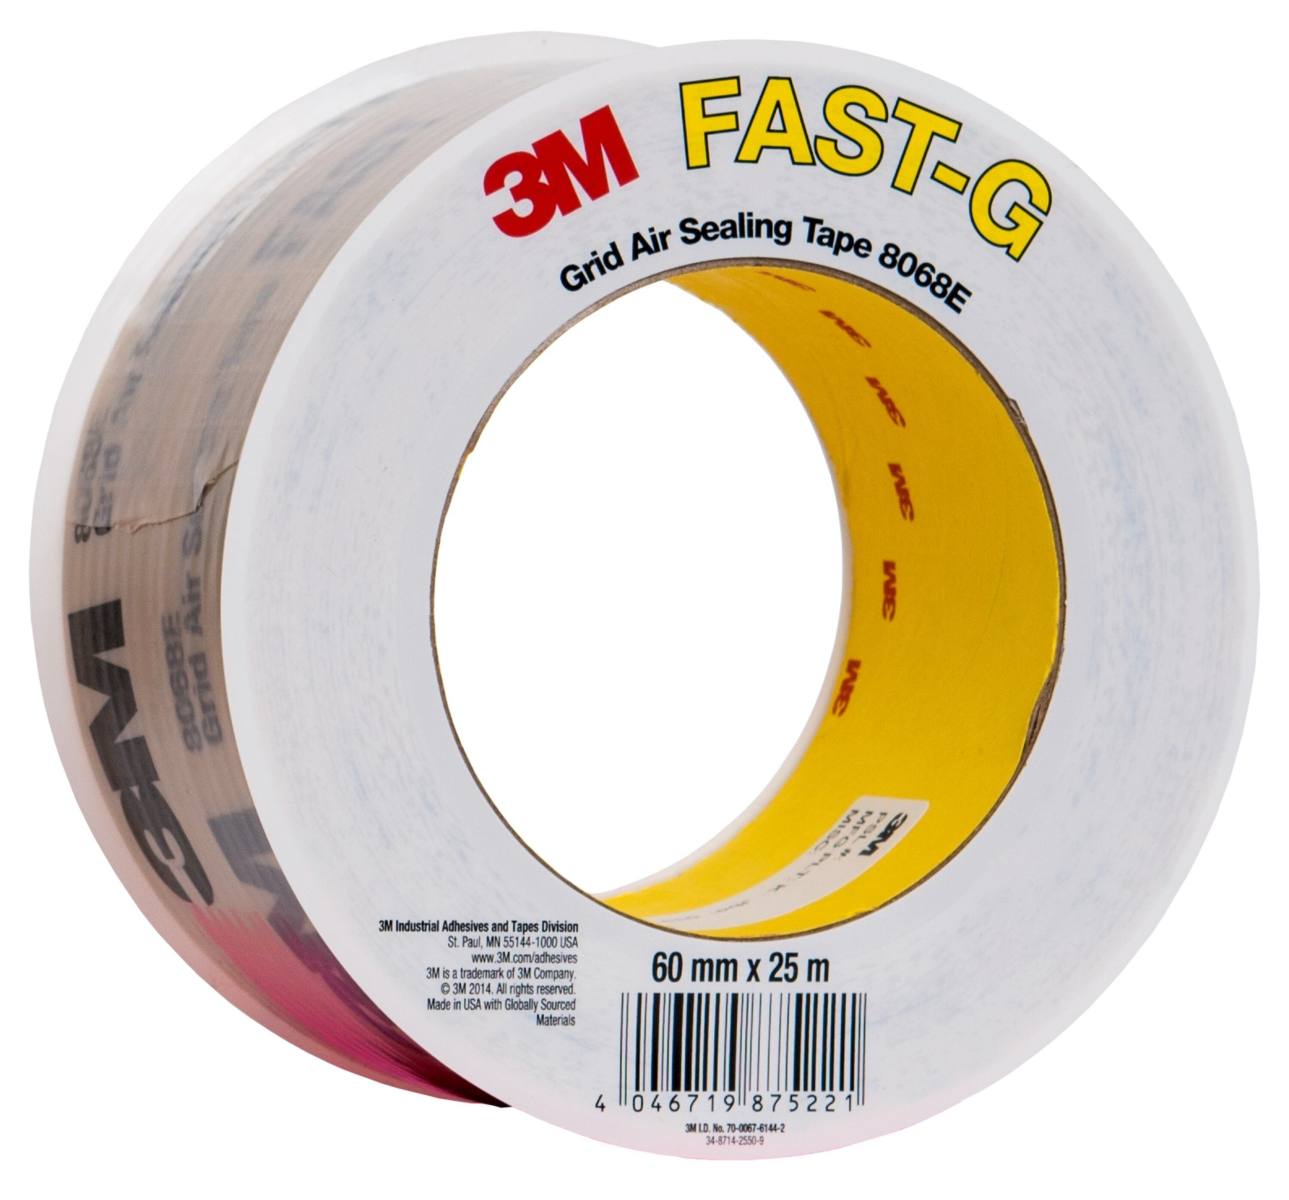 3M FAST-G 8068E Flexible Air Sealing Tape; No Liner, 60mm x 25m, 1.3mm